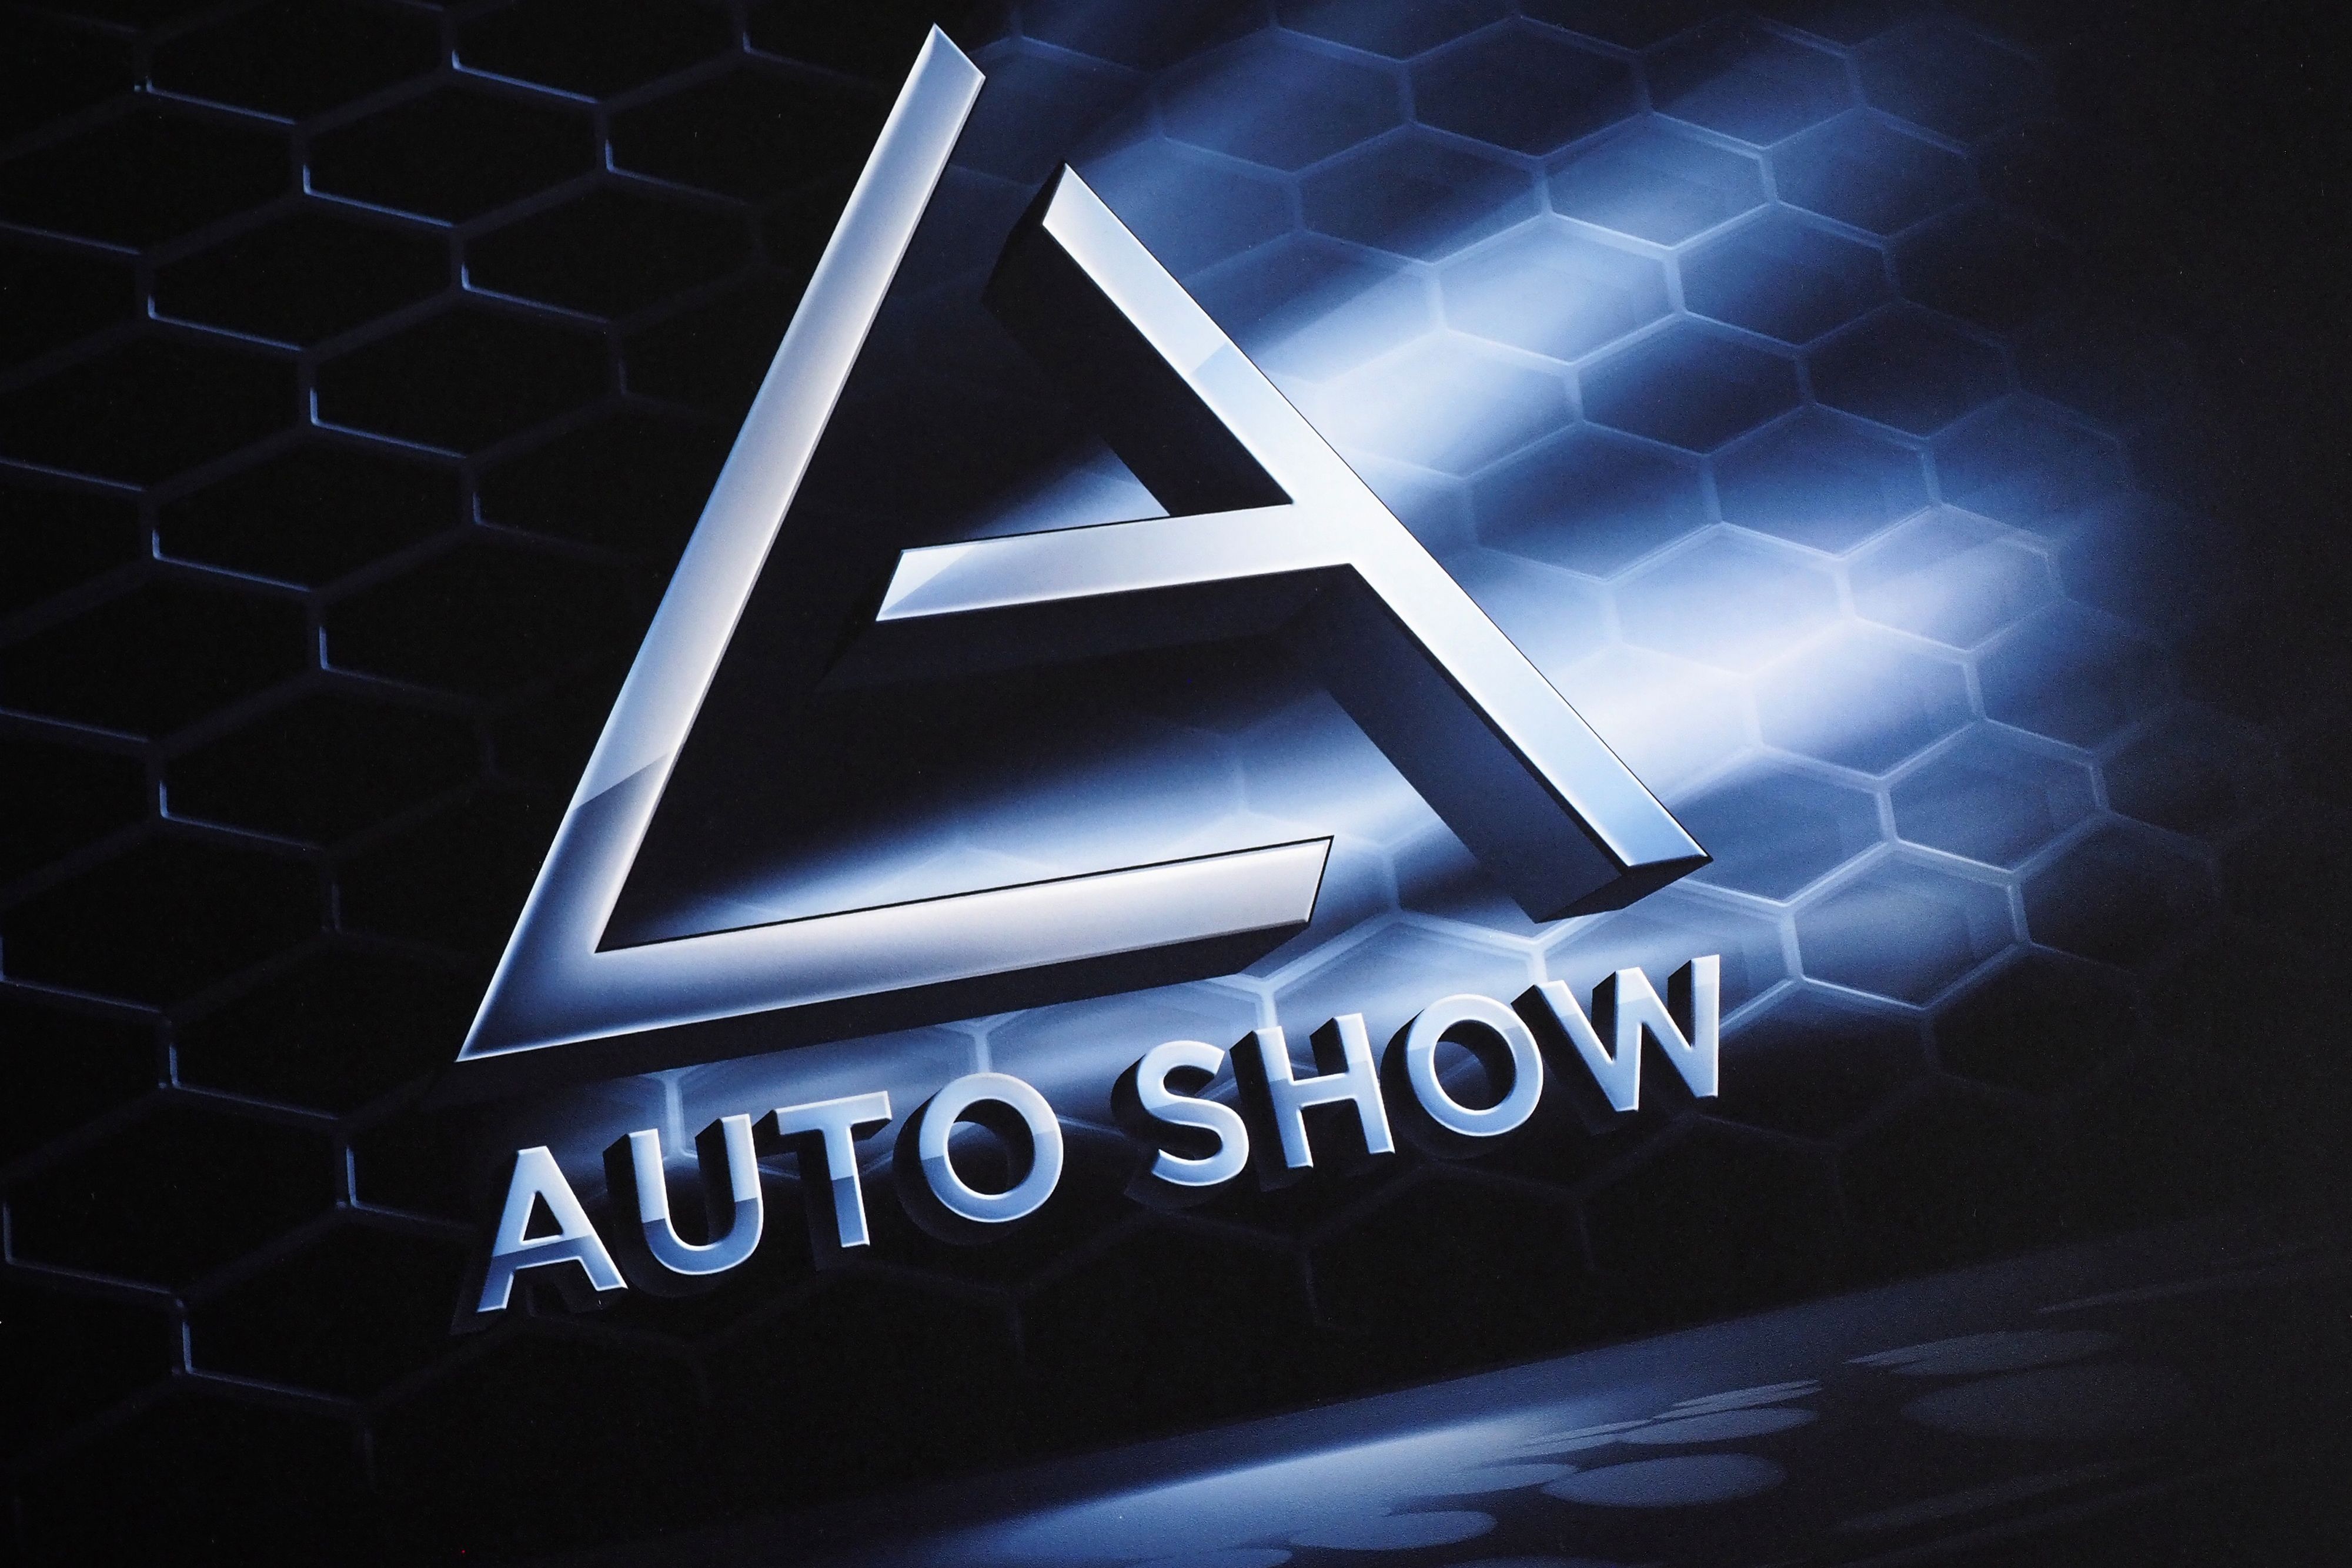 LA Auto Show sign